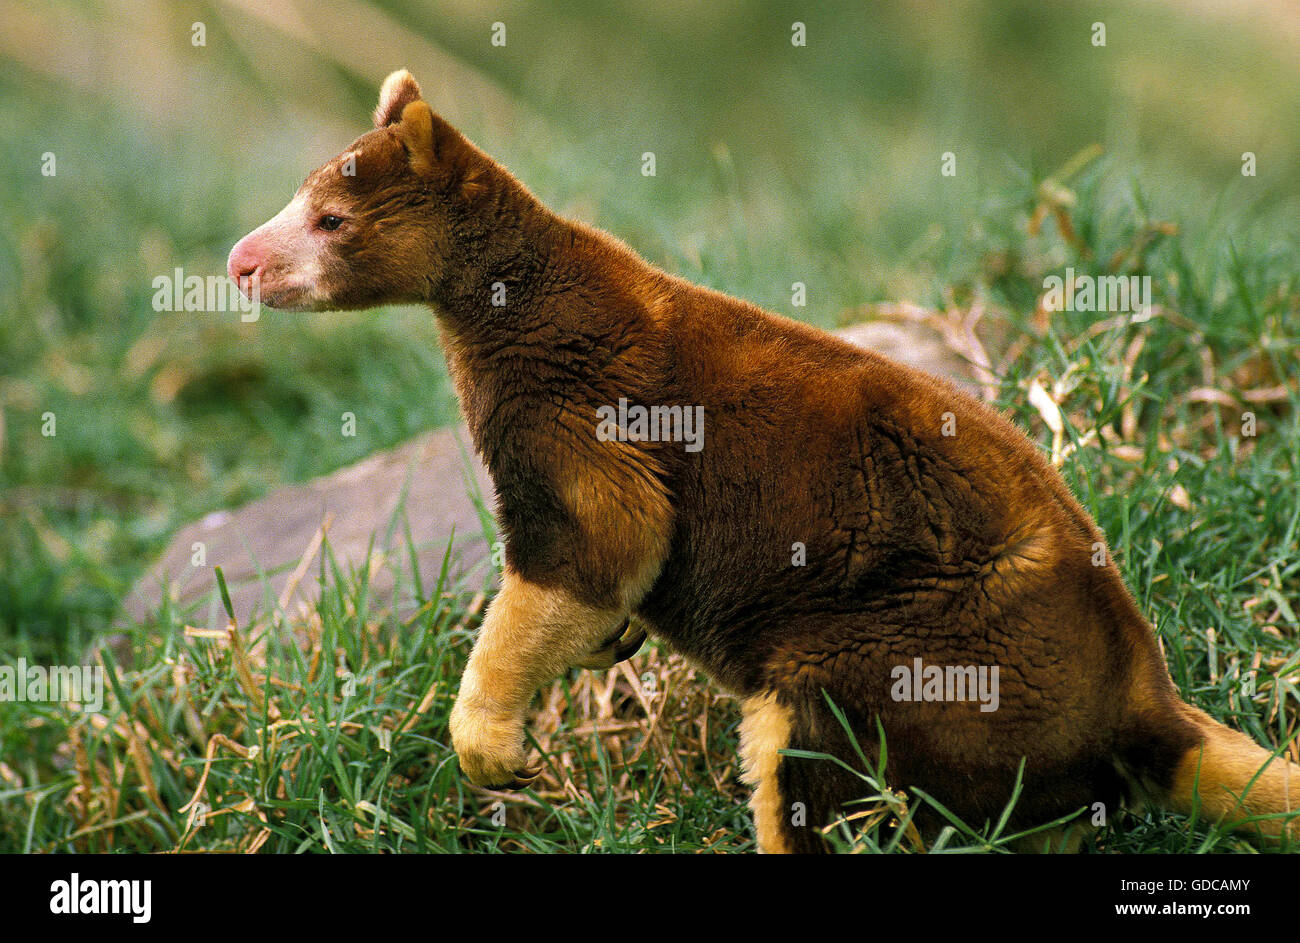 Matschie's tree Kangaroo, dendrolagus matschiei, adulti sull'erba Foto Stock